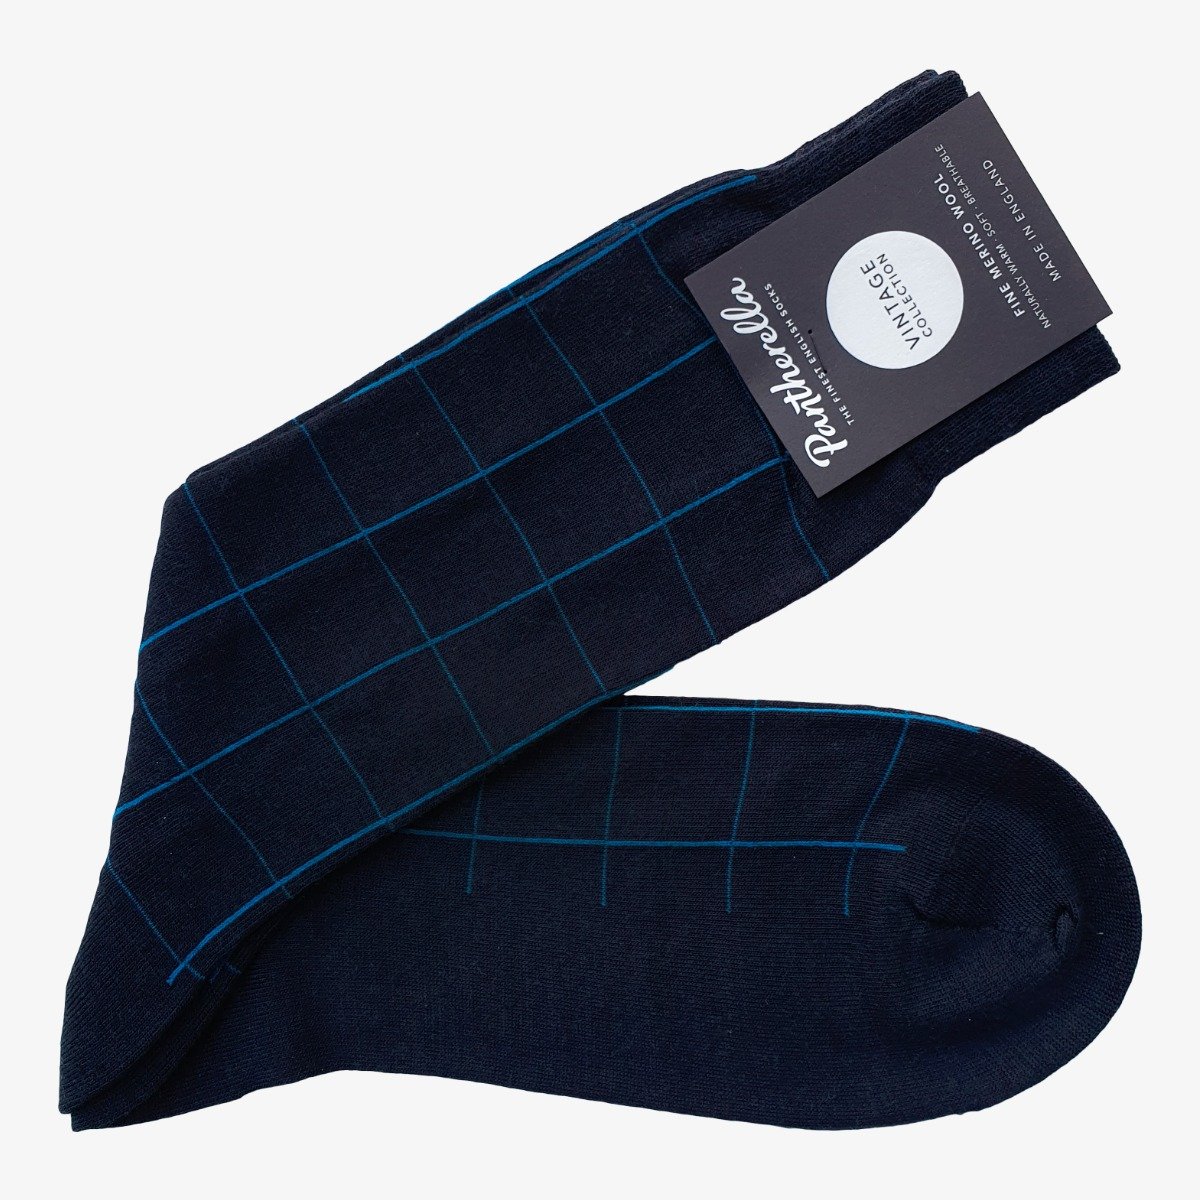 Pantherella Westleigh navy windowpane merino wool mid-calf socks